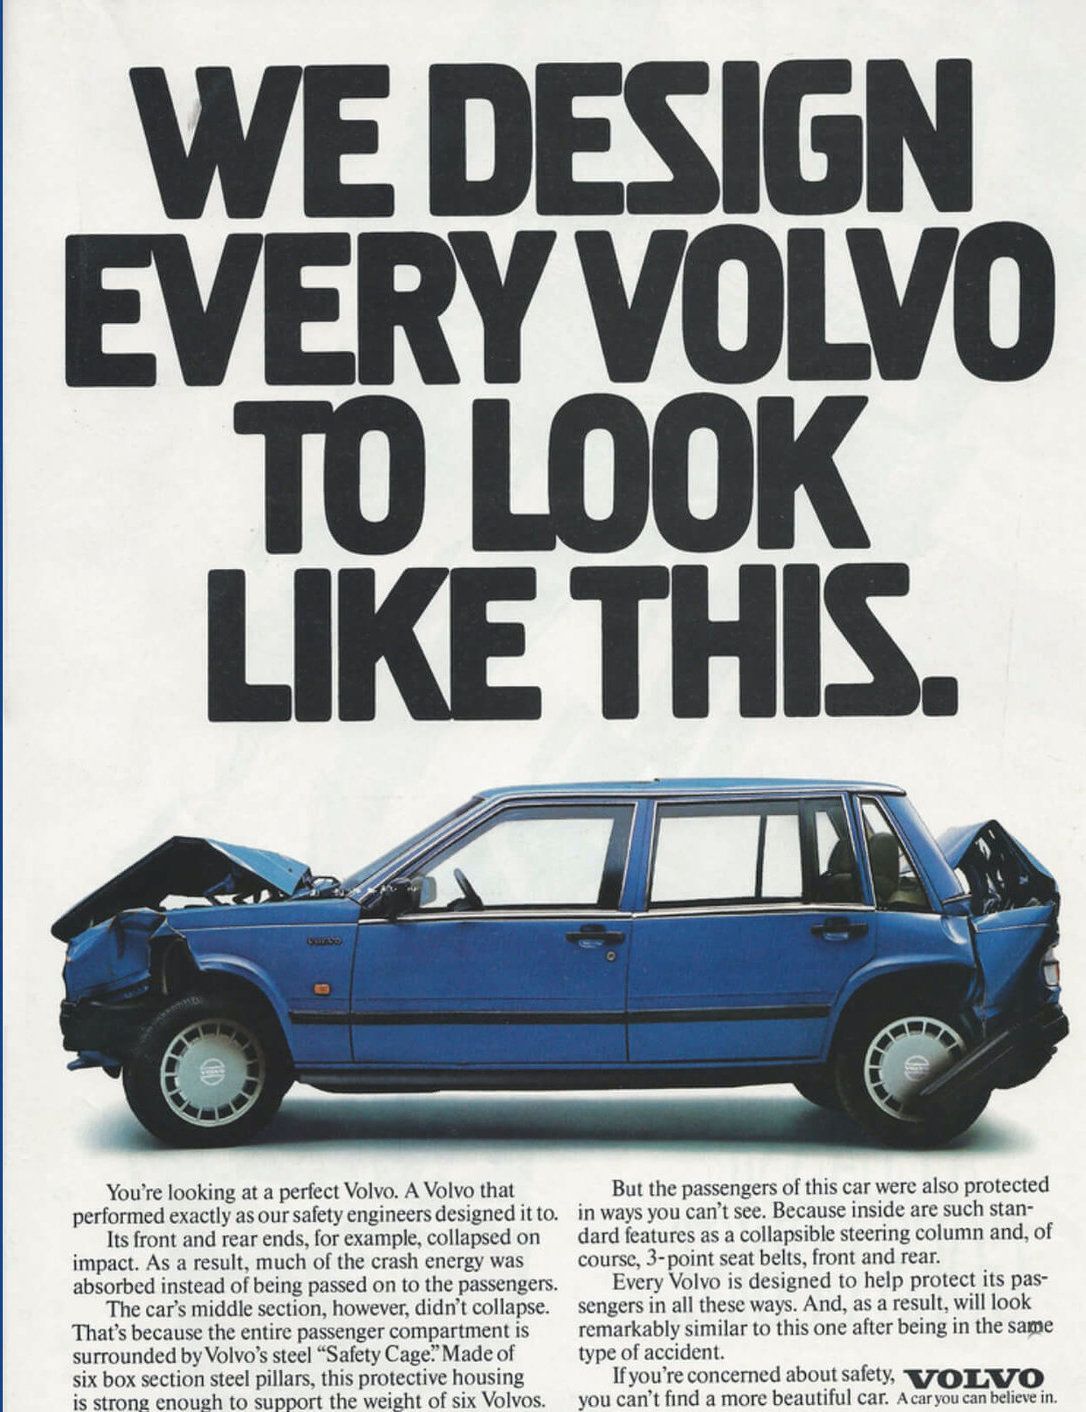 Branding campaign of Volvo